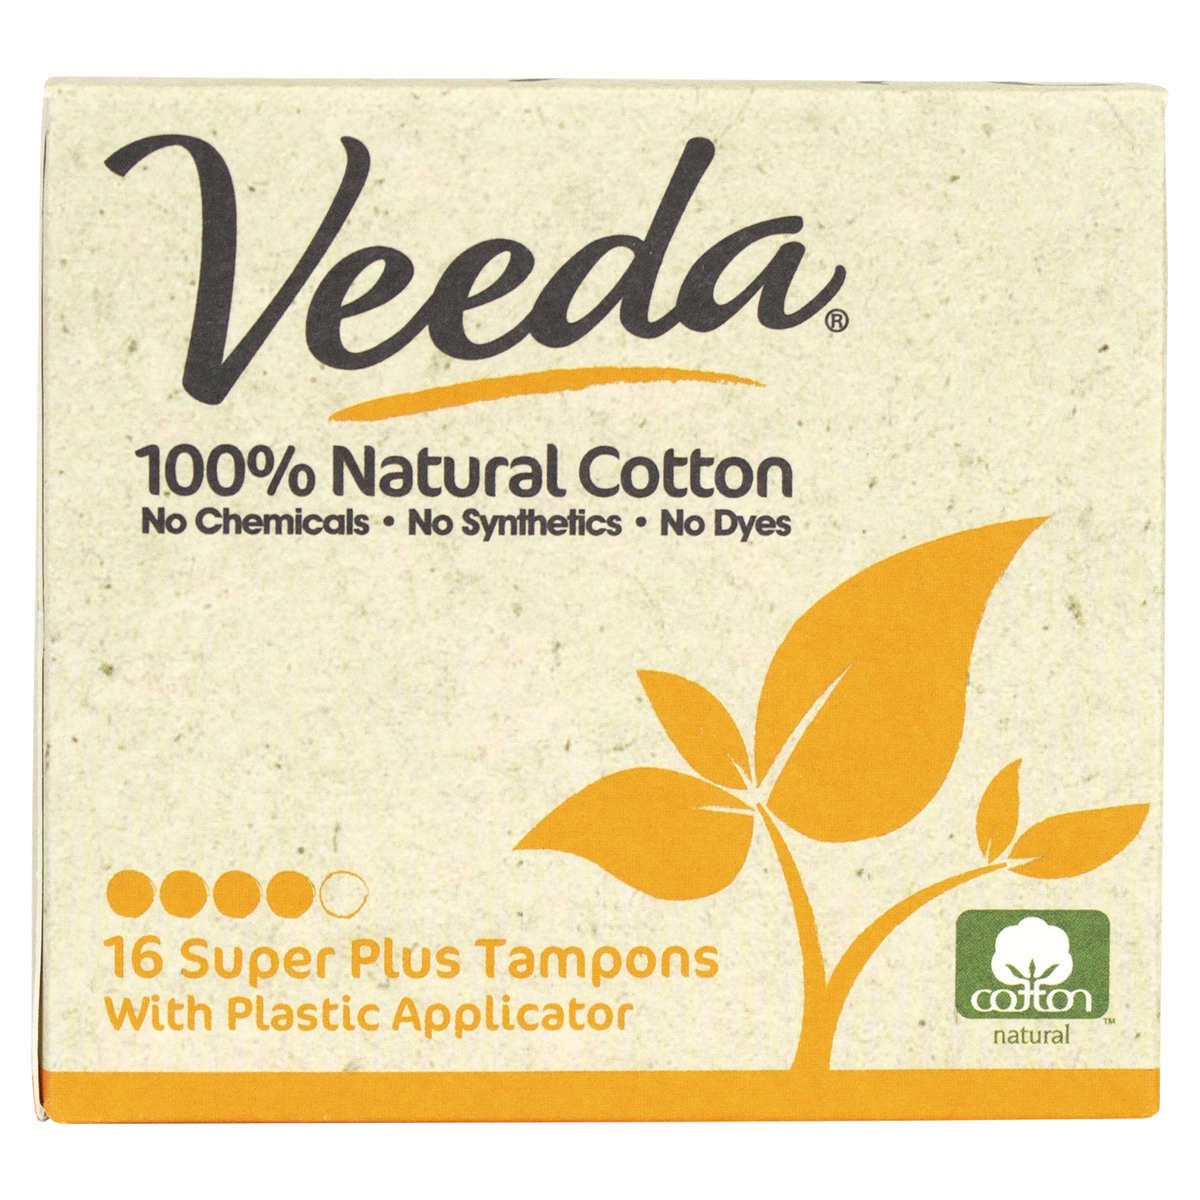 Veeda Natural All-Cotton Tampons, Super Plus, Compact Applicator 16 ct